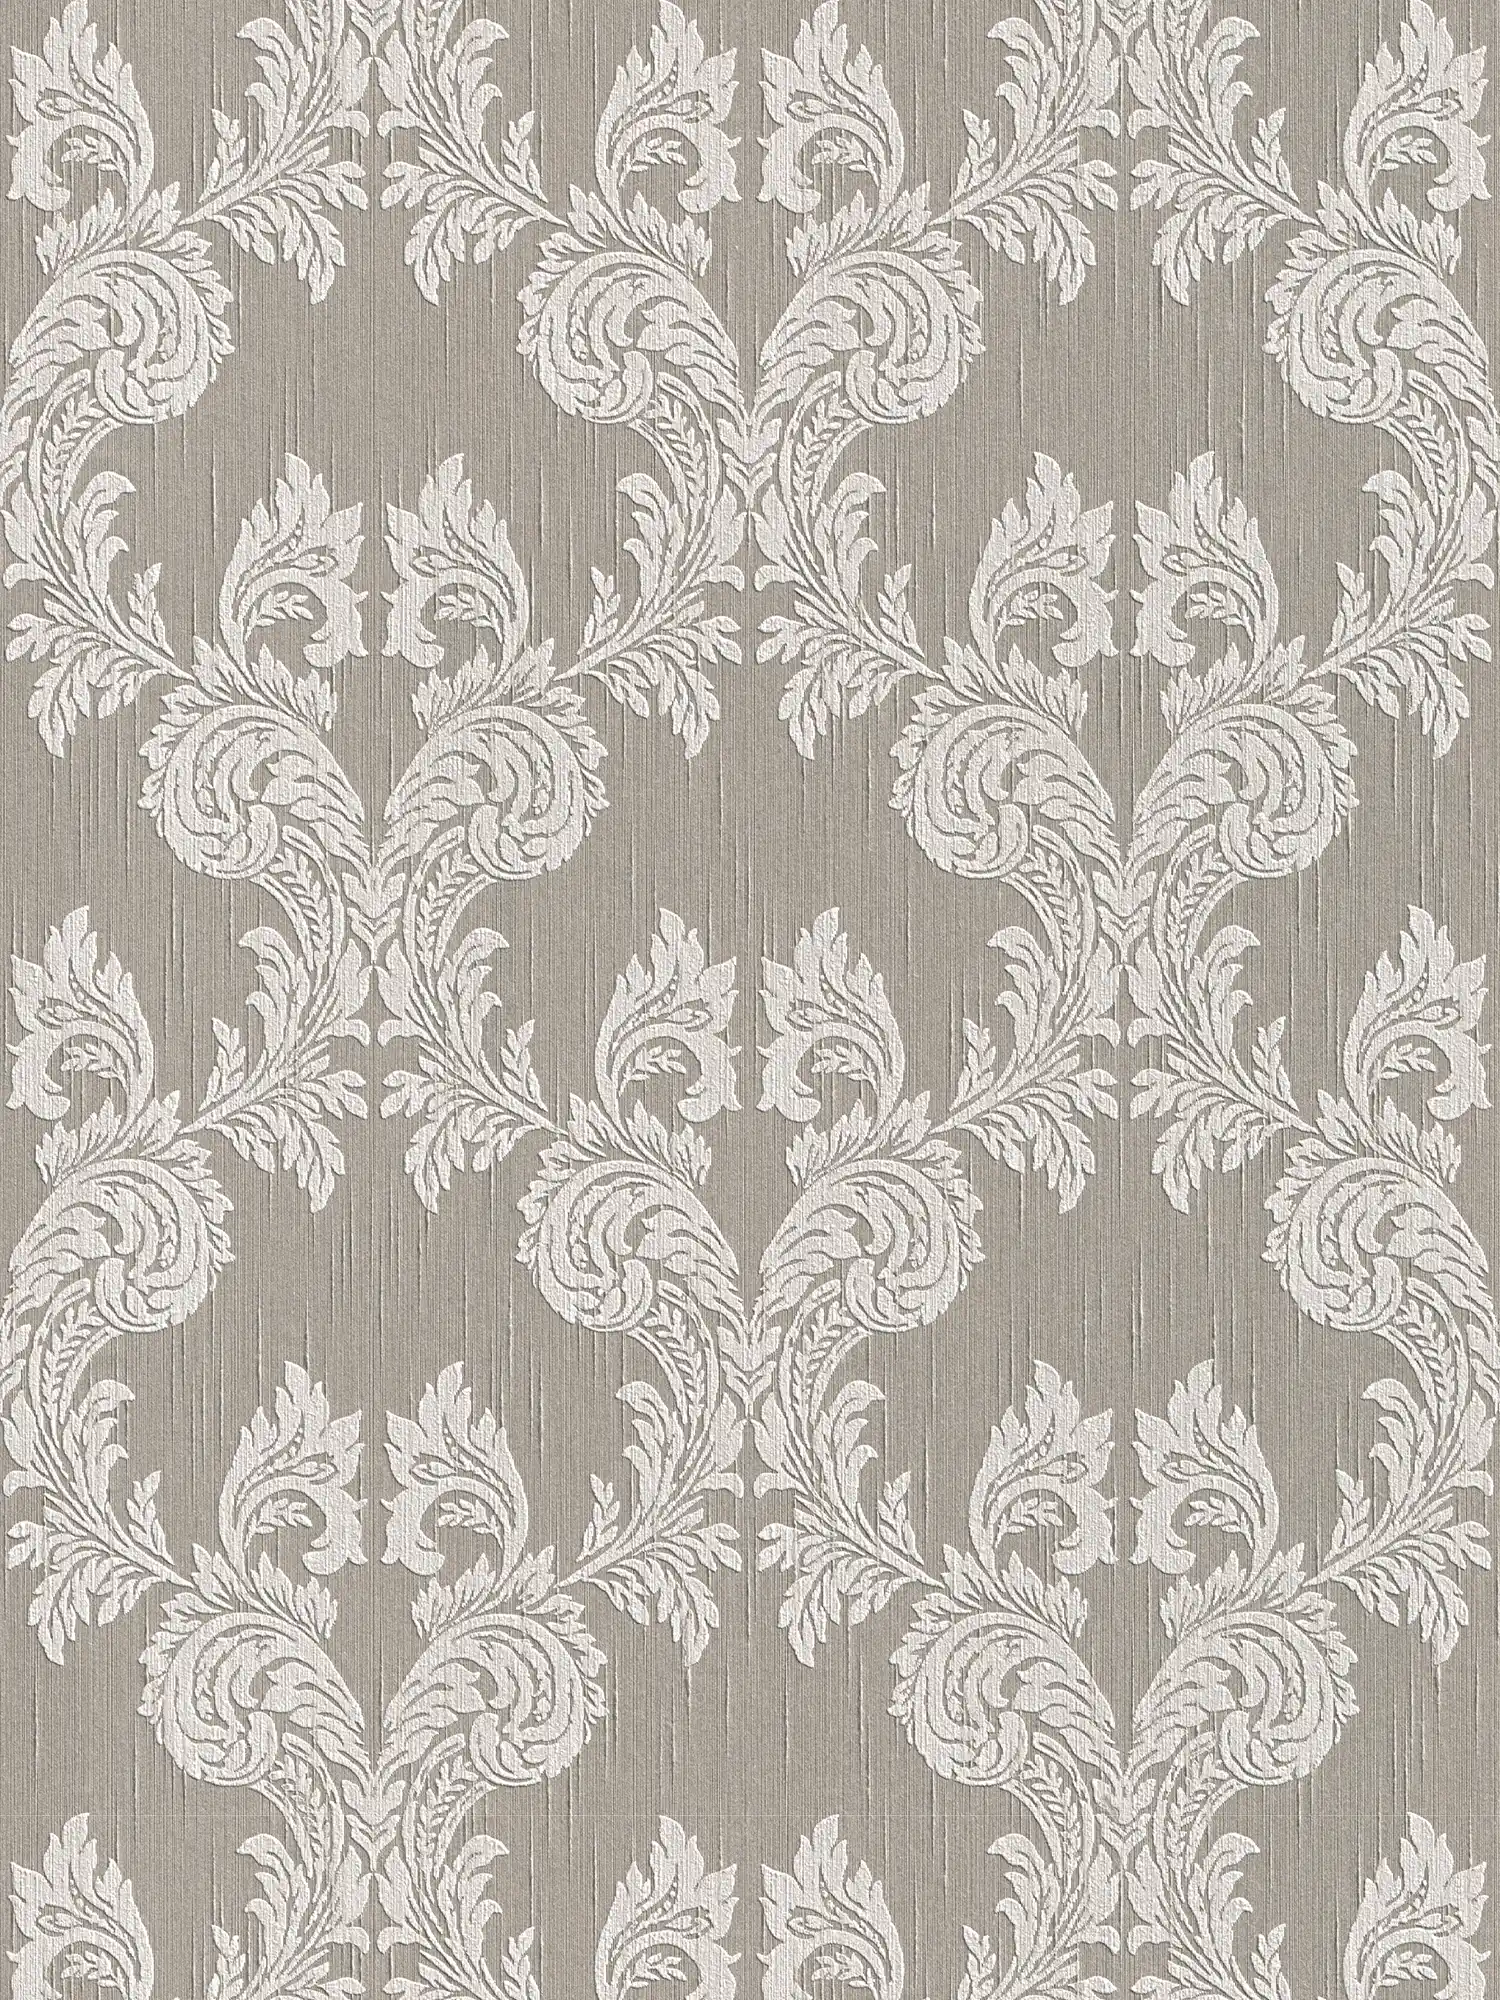 Tapete Barock Ornamente & Textildesign – Beige, Grau
